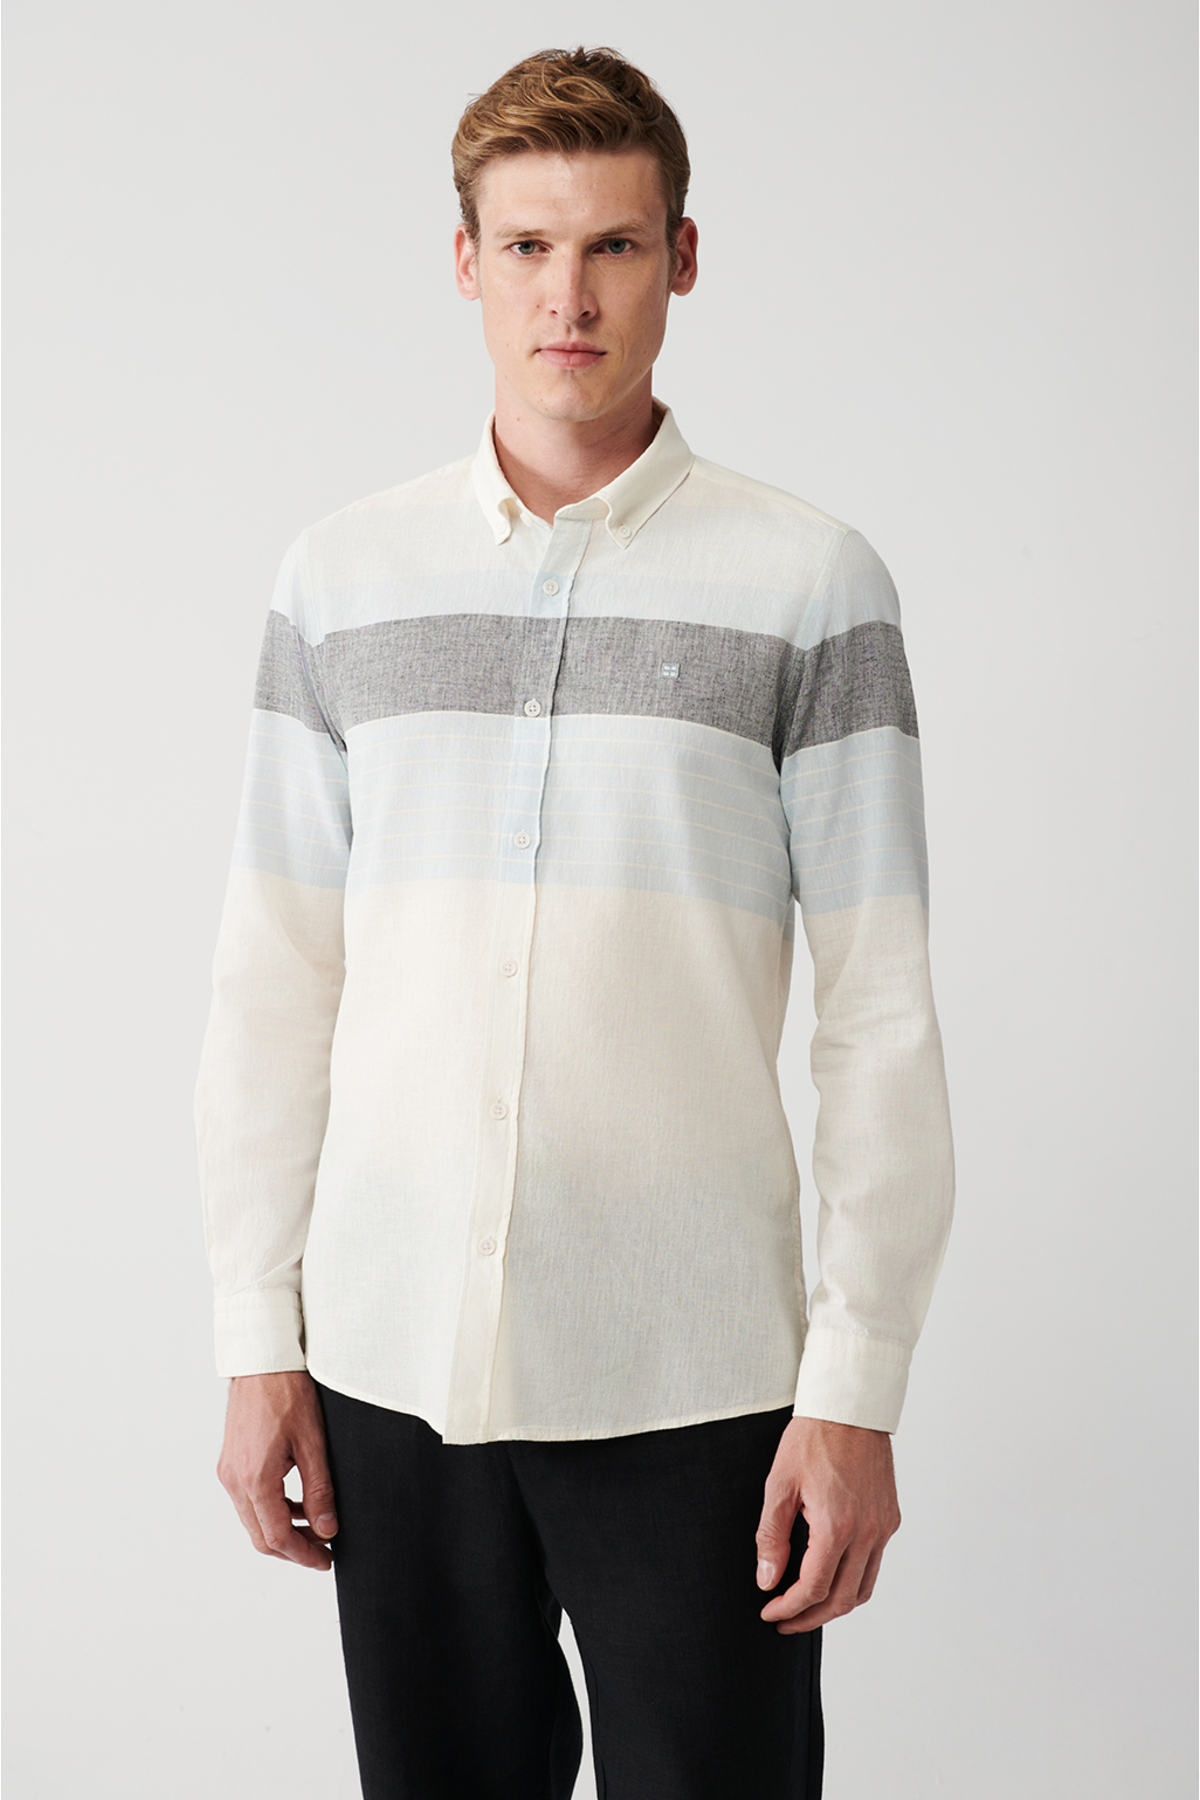 Avva Men's White Cotton Linen Blend Buttoned Collar Striped Slim Fit Slim Fit Shirt